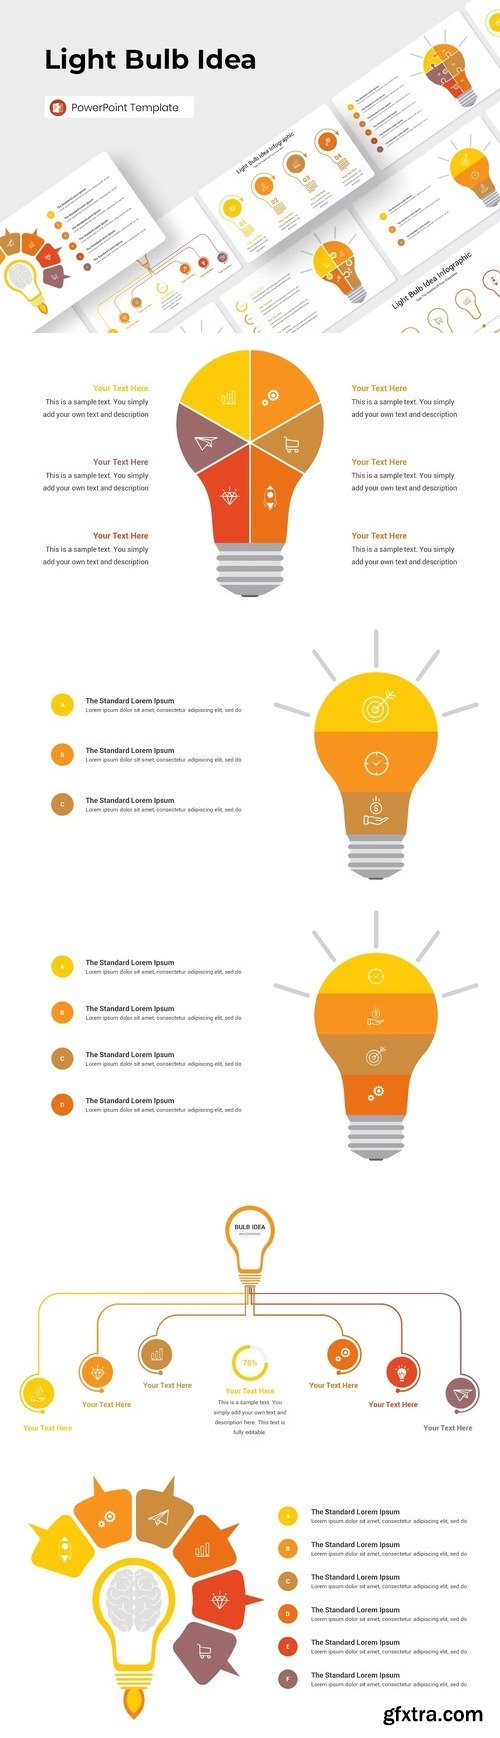 Light Bulb Idea PowerPoint Template 73H2TK8